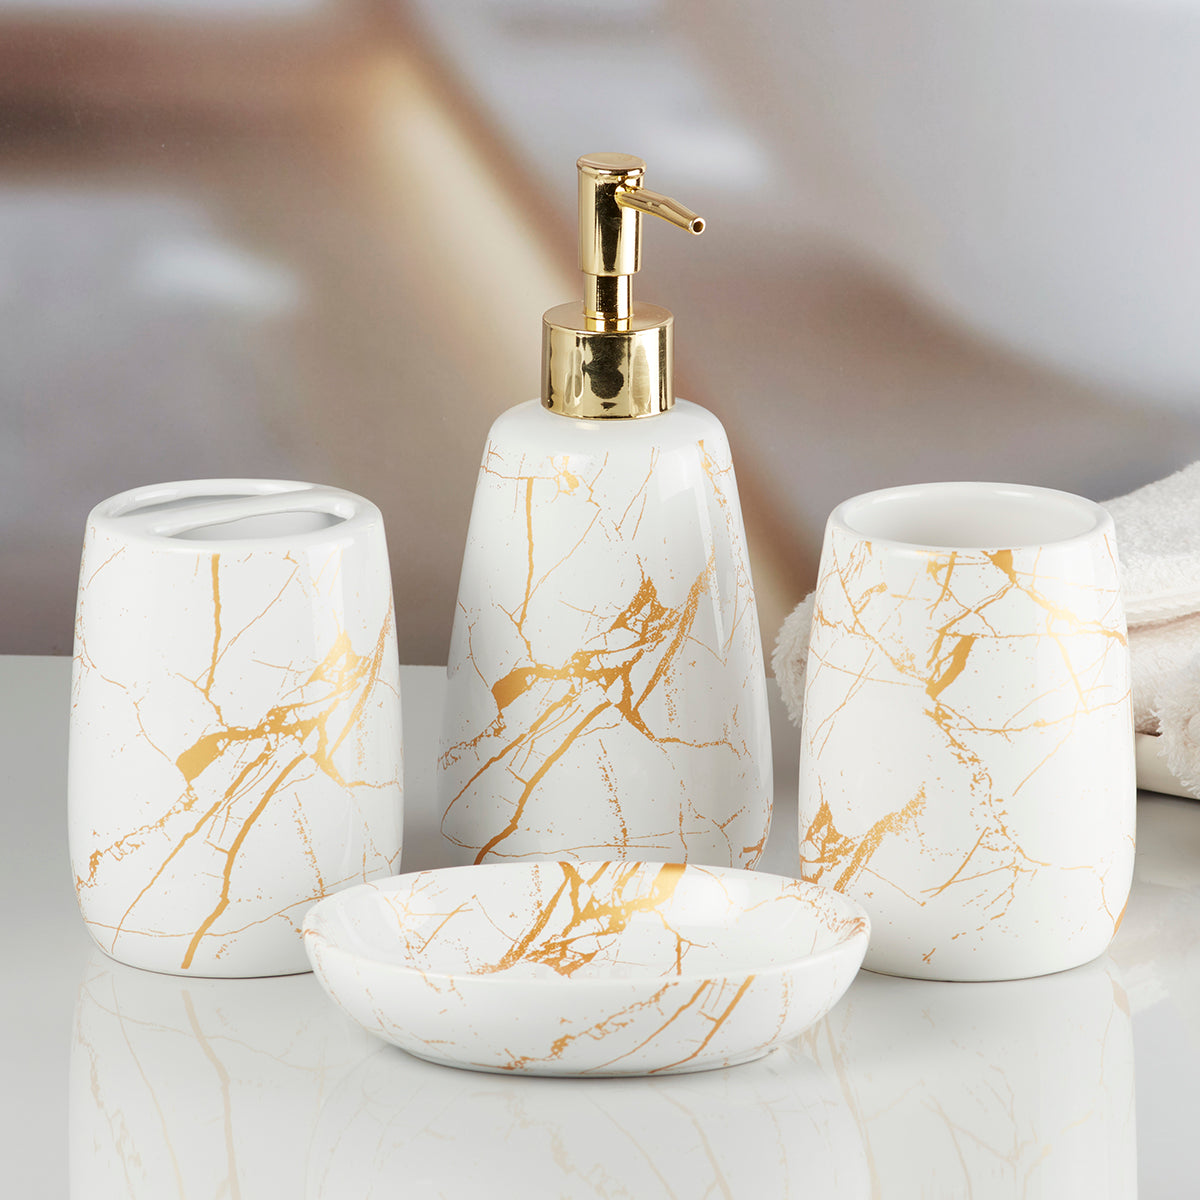 Ceramic Bathroom Accessories Set of 4, Modern Bath Set with Liquid